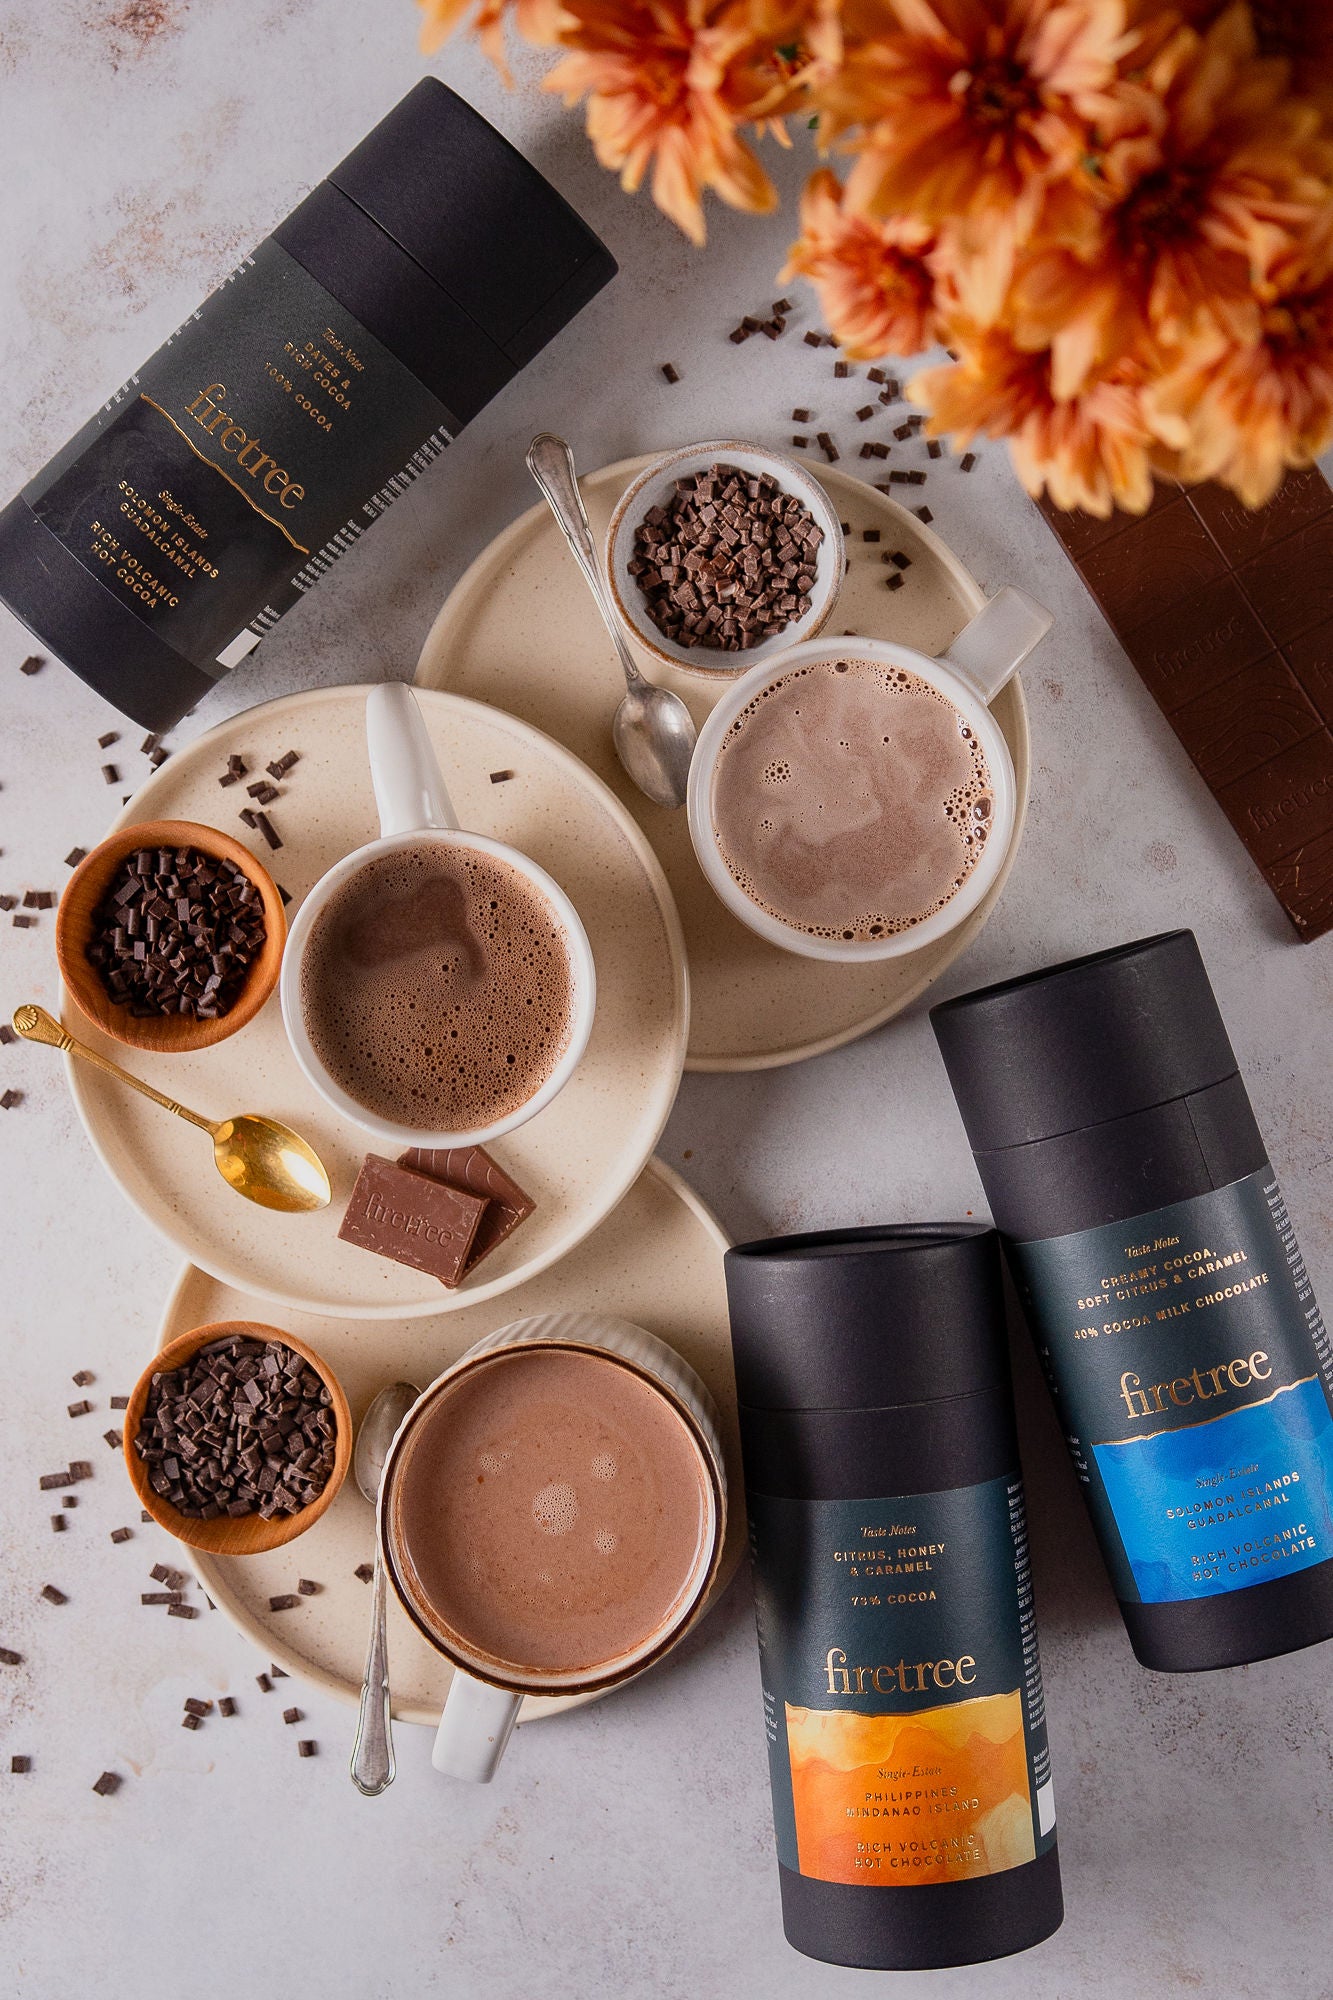 Luxury Hot Chocolate